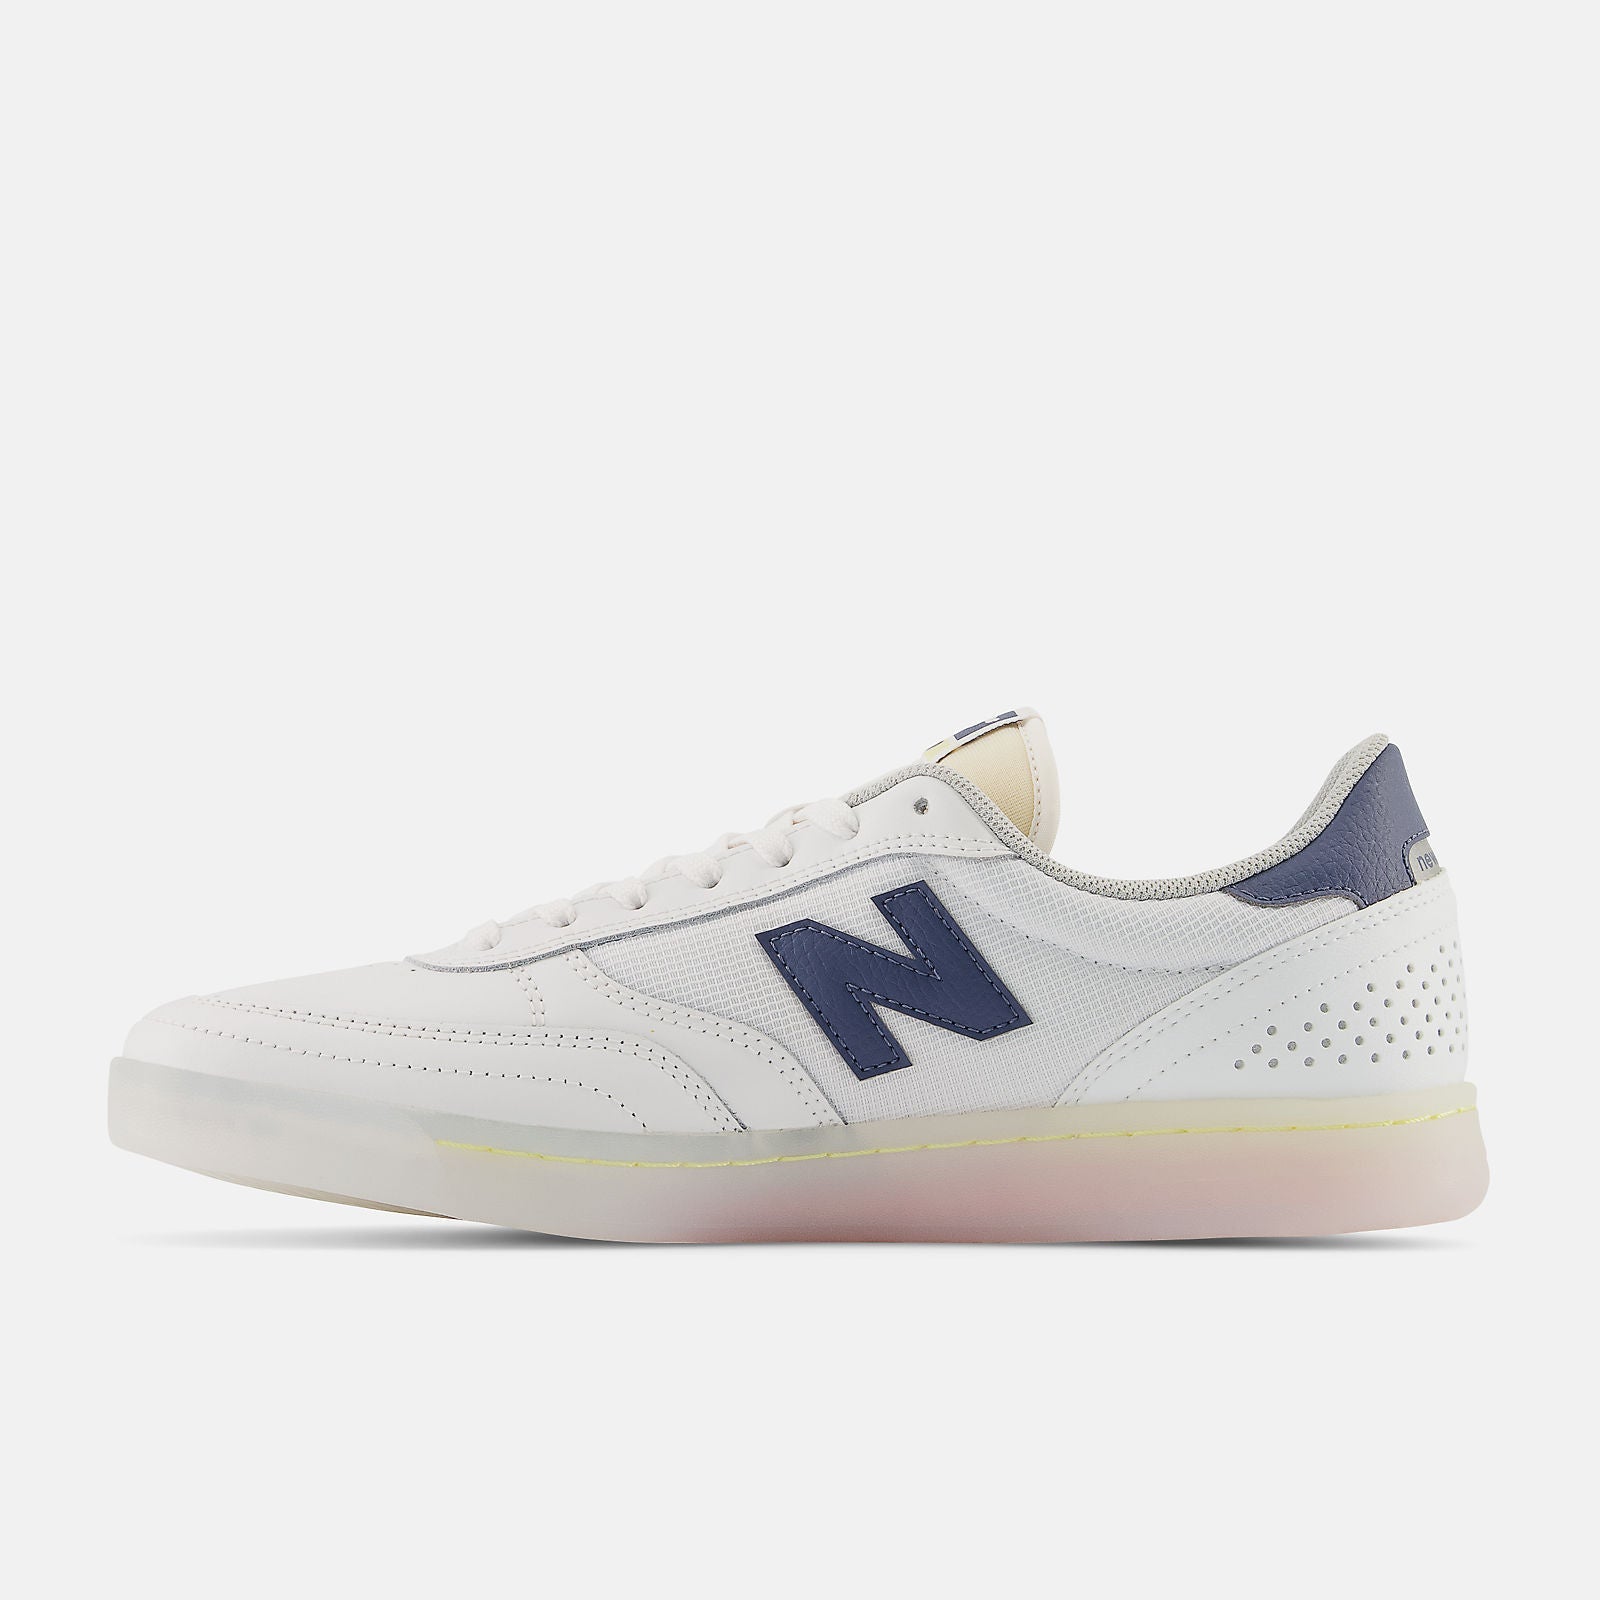 NB NUMERIC 440 Shoes White/Blue Men's Skate Shoes New Balance 